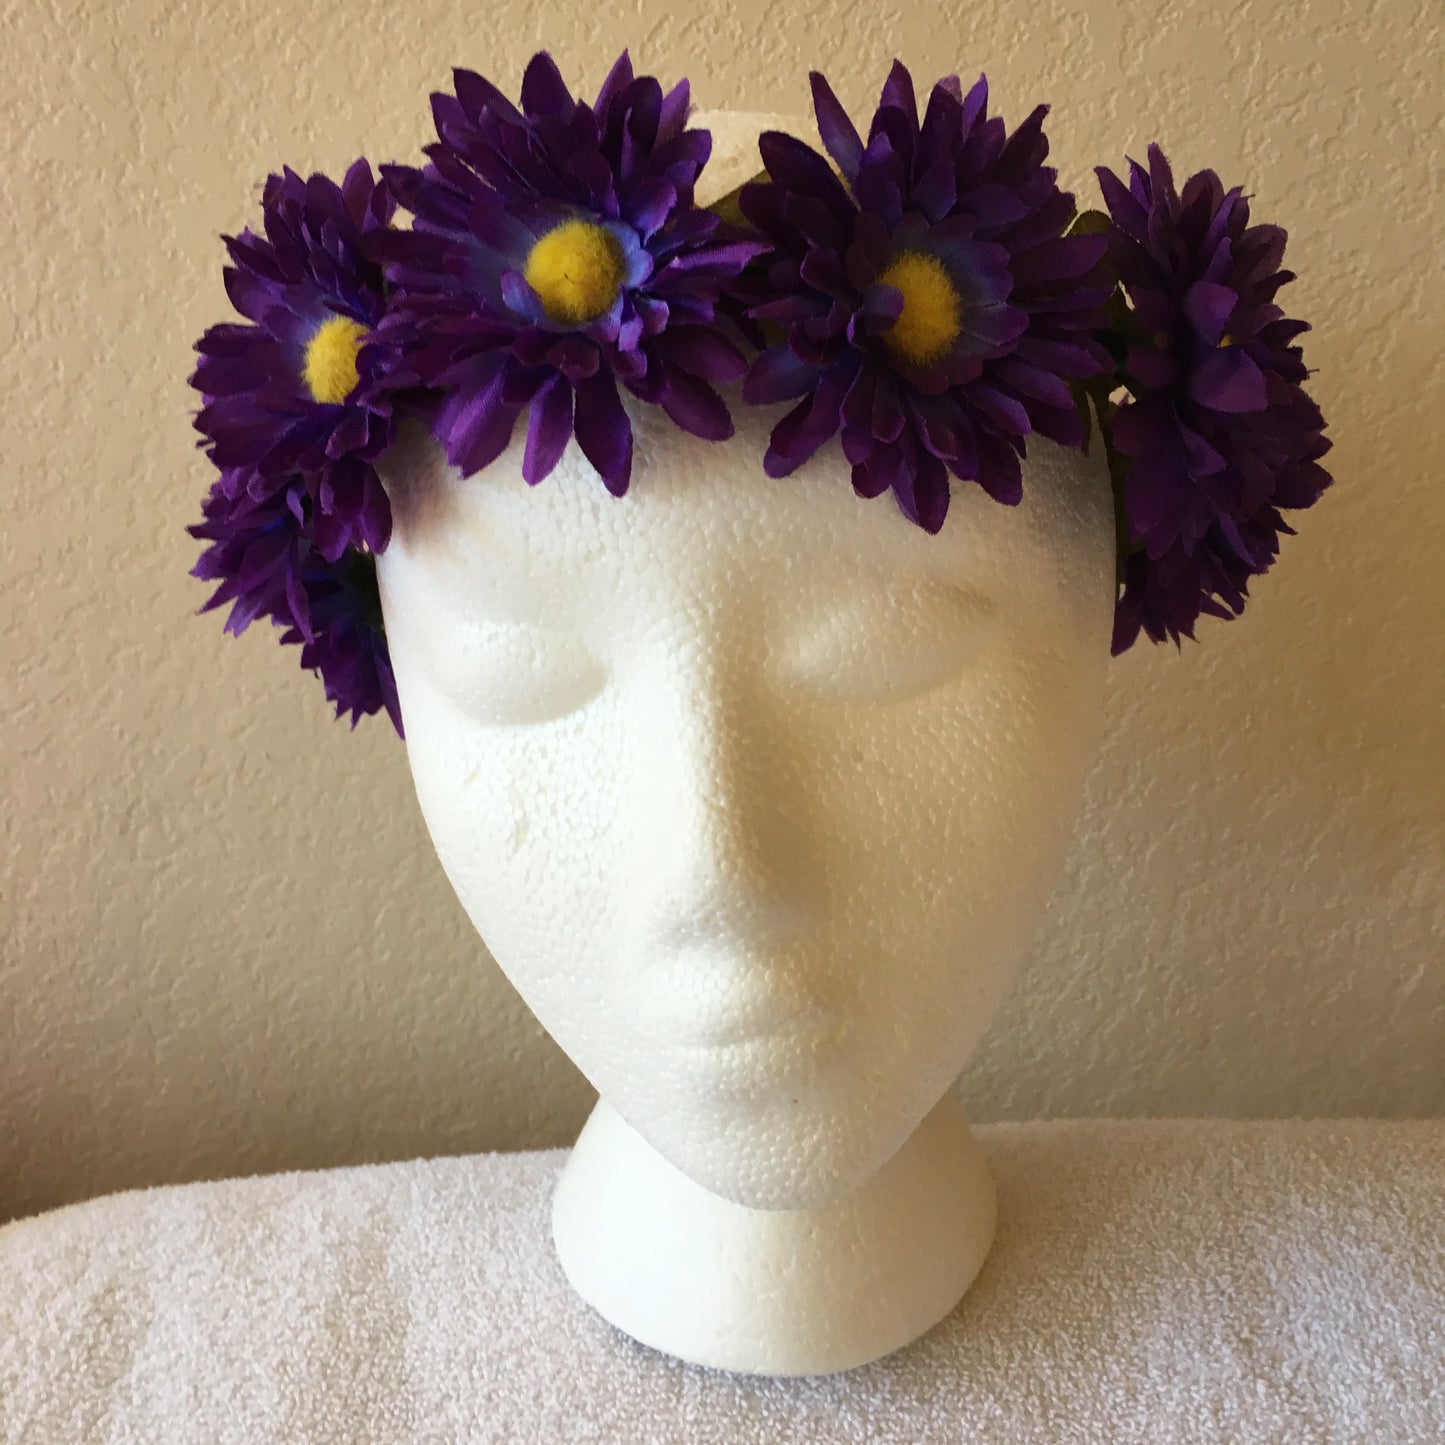 Small Wreath - Purple daisies